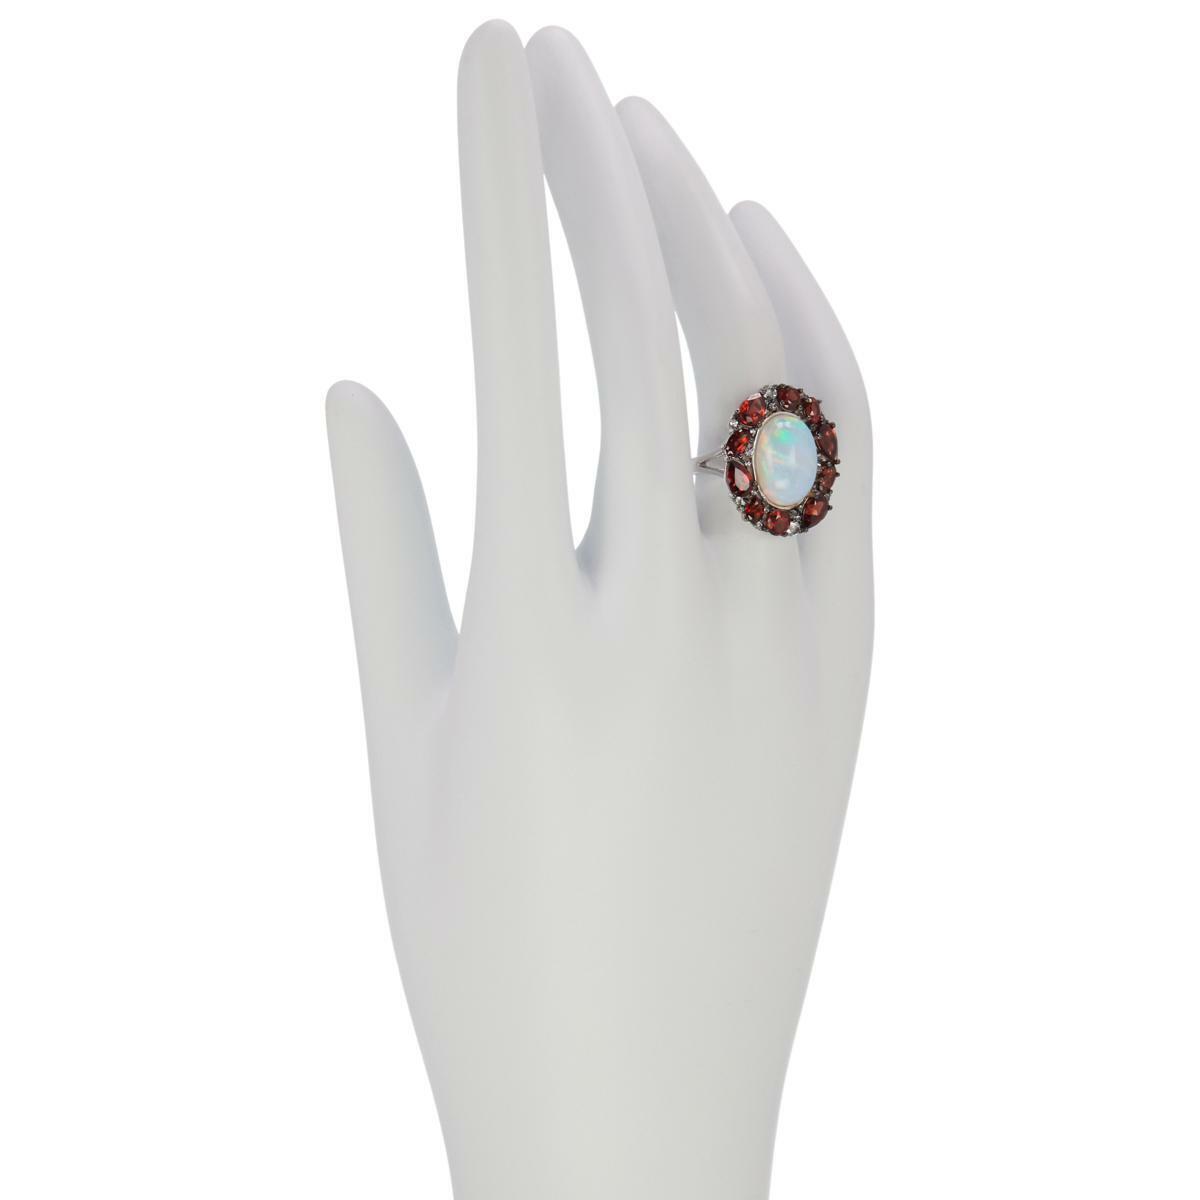 Paul Deasy Gem Opal, Garnet & White Topaz Sterling Silver Oval Ring Size 5